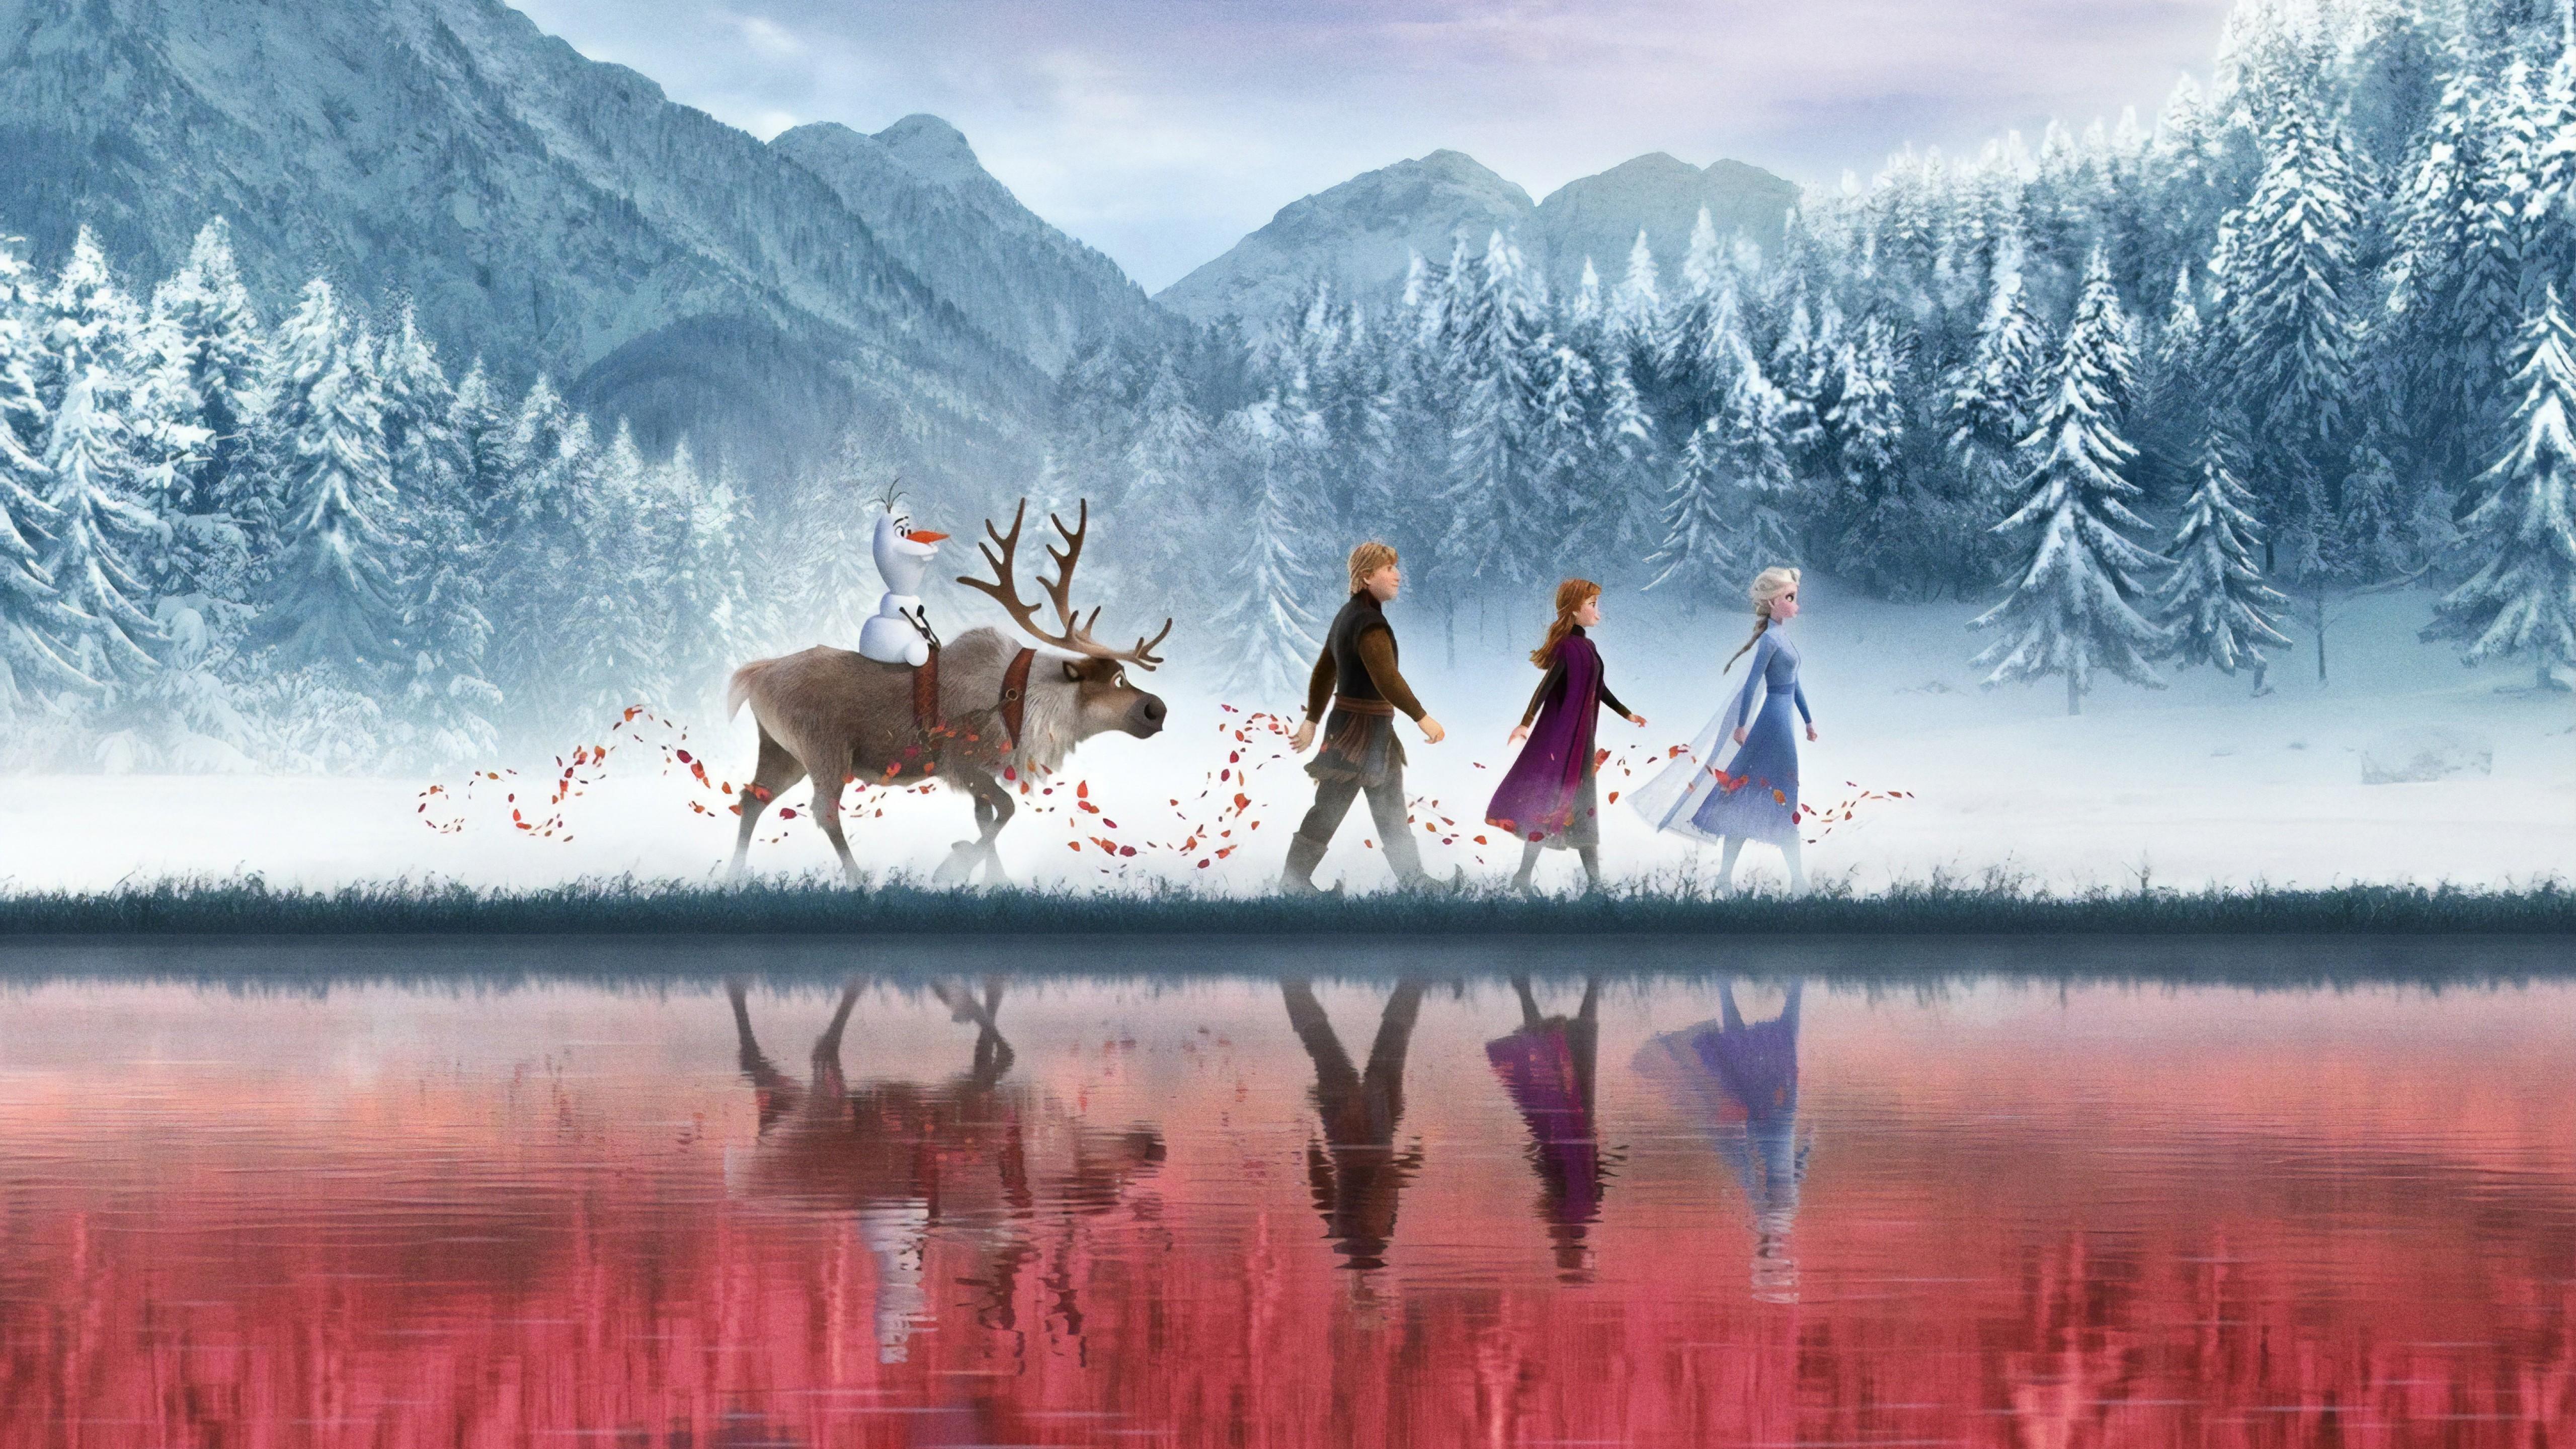 Wallpaper Frozen Olaf, Kristoff, Queen Elsa, Anna, Hans, 4K